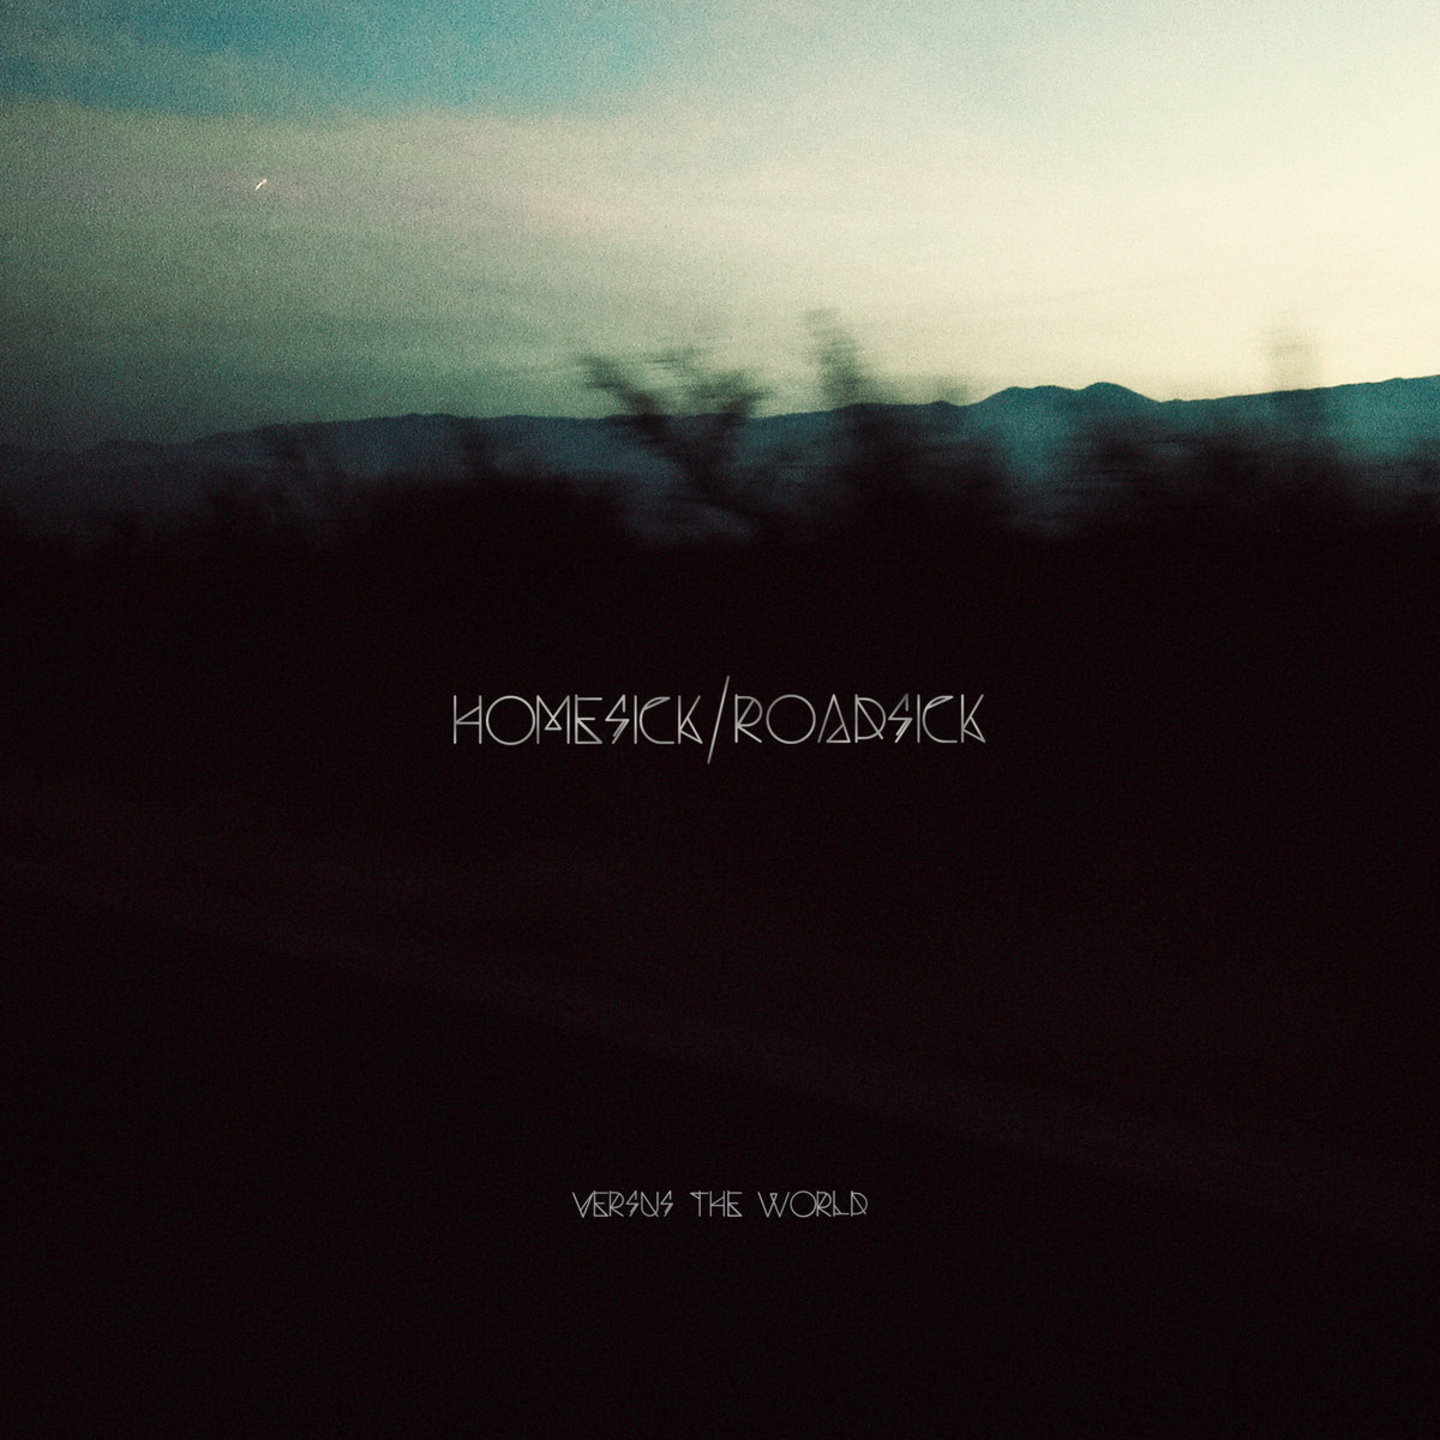 VERSUS THE WORLD - Homesick  Roadsick LP Colour Vinyl